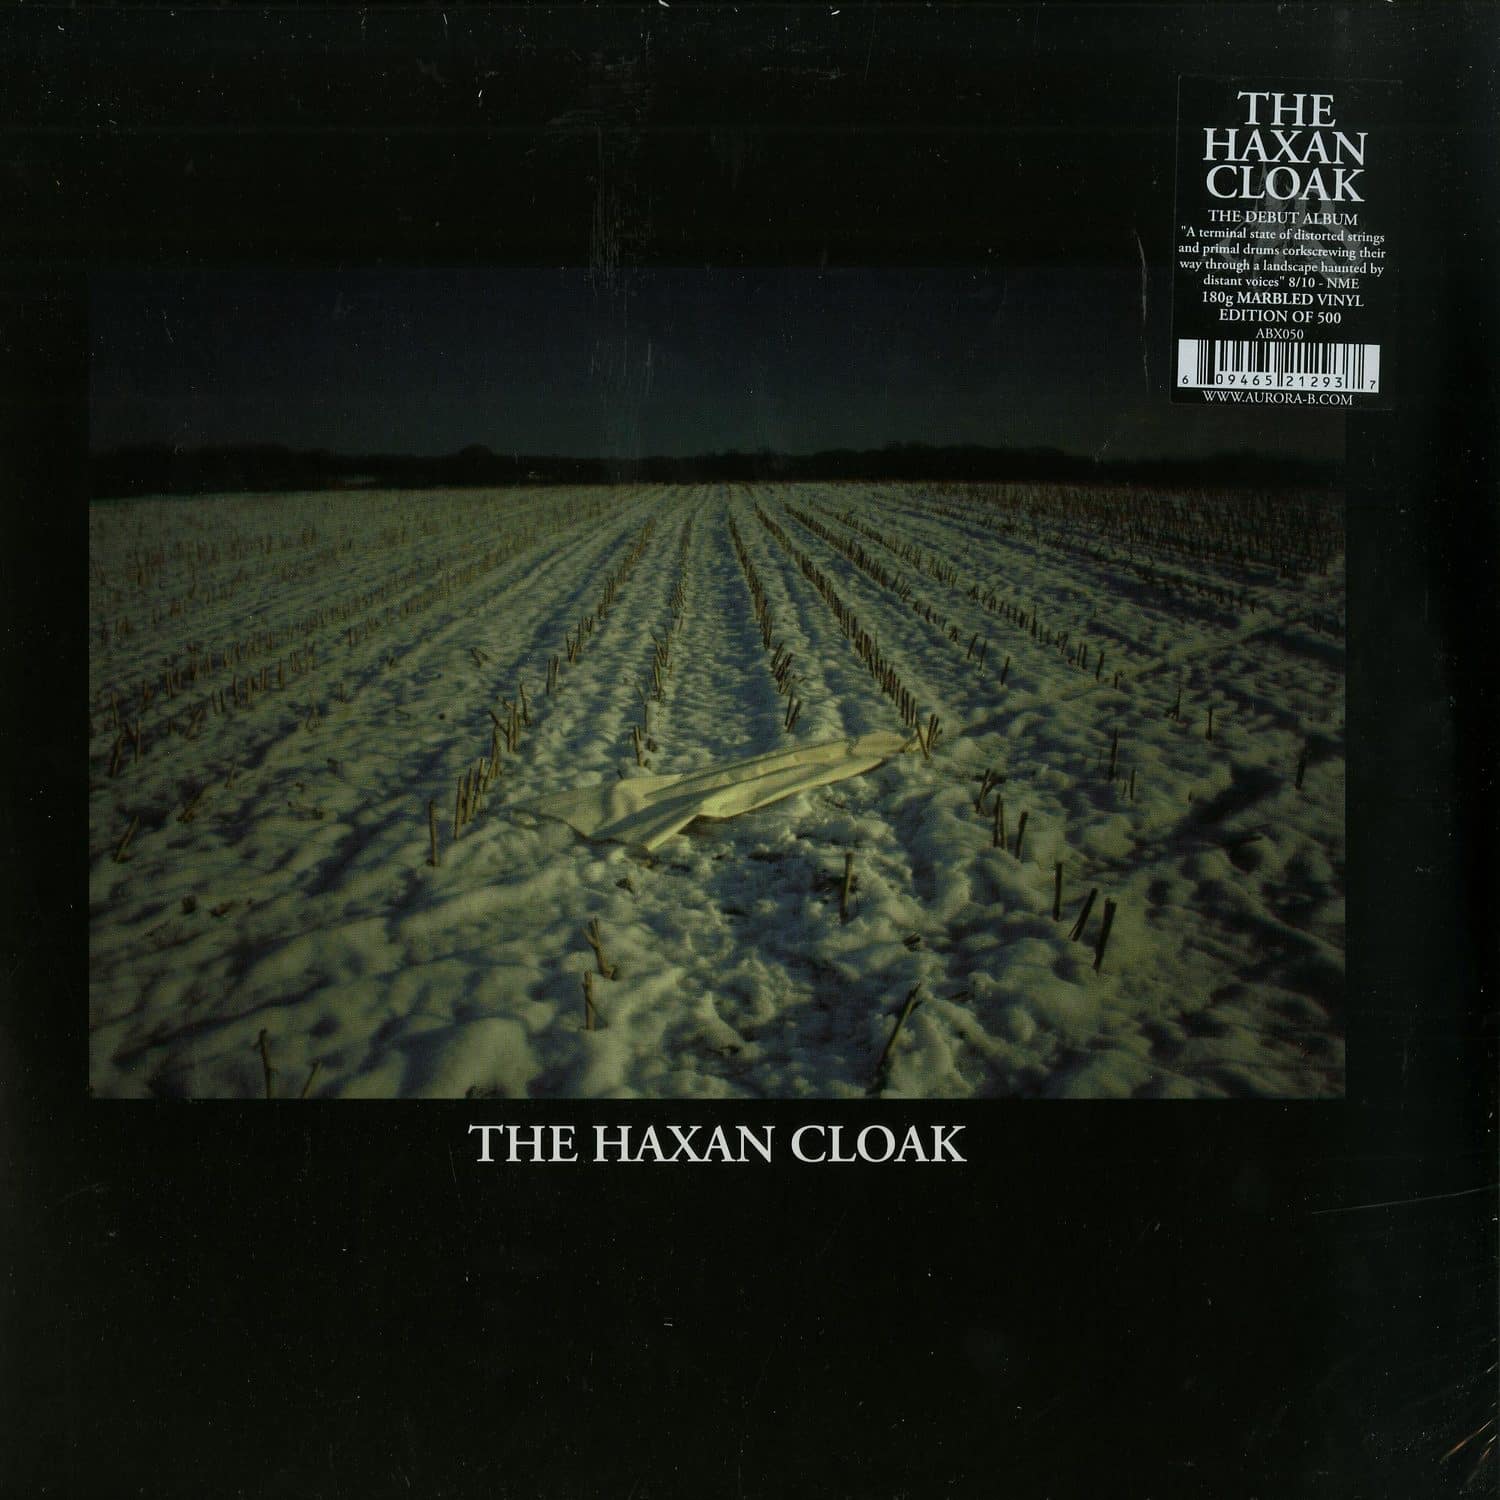 The Haxan Cloak - THE HAXAN CLOAK 